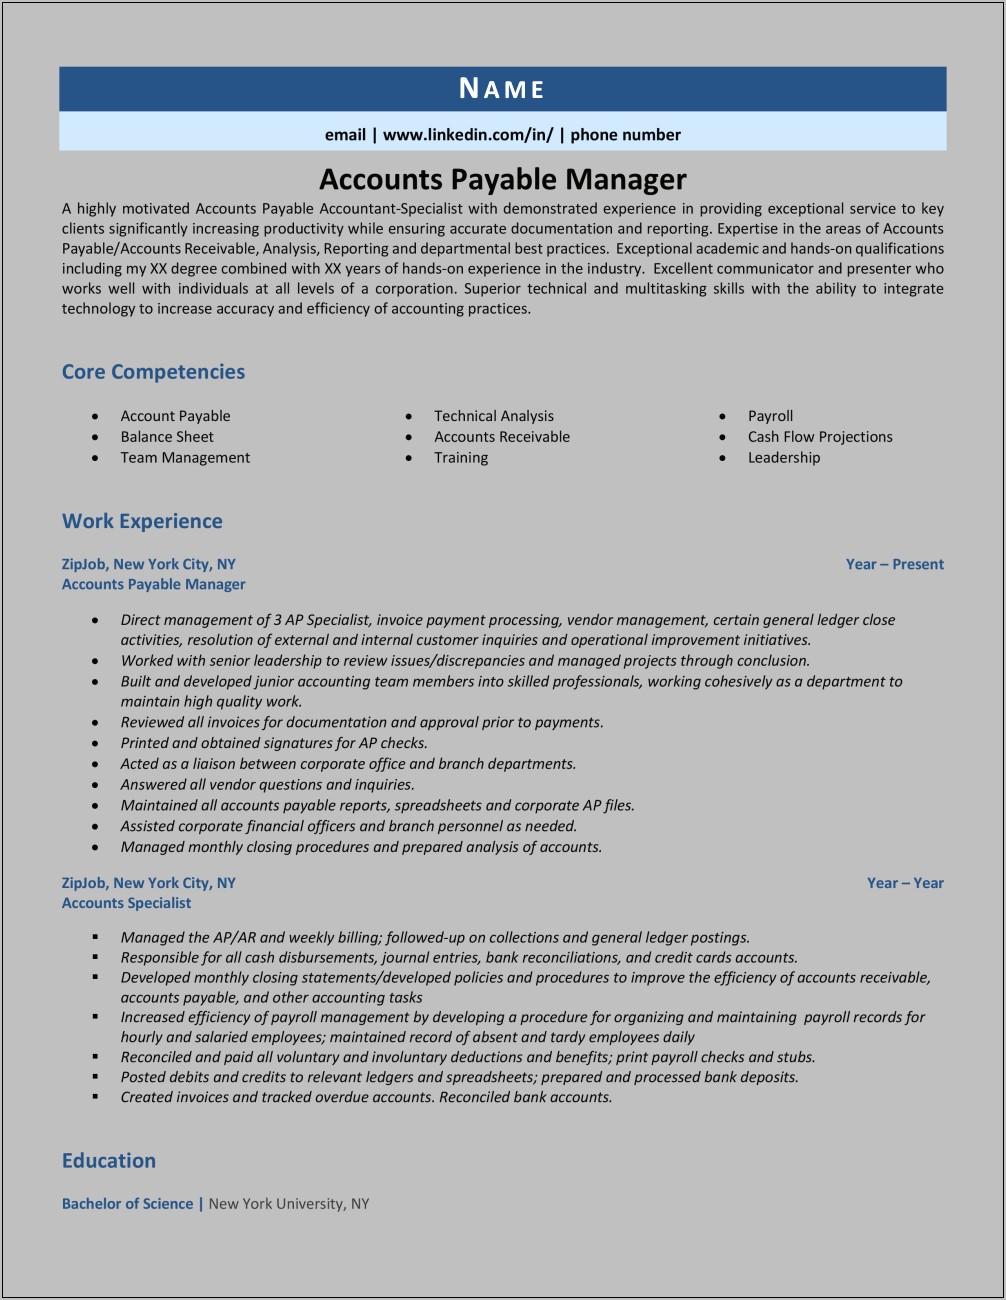 Global Accounts Payable Manager Resume